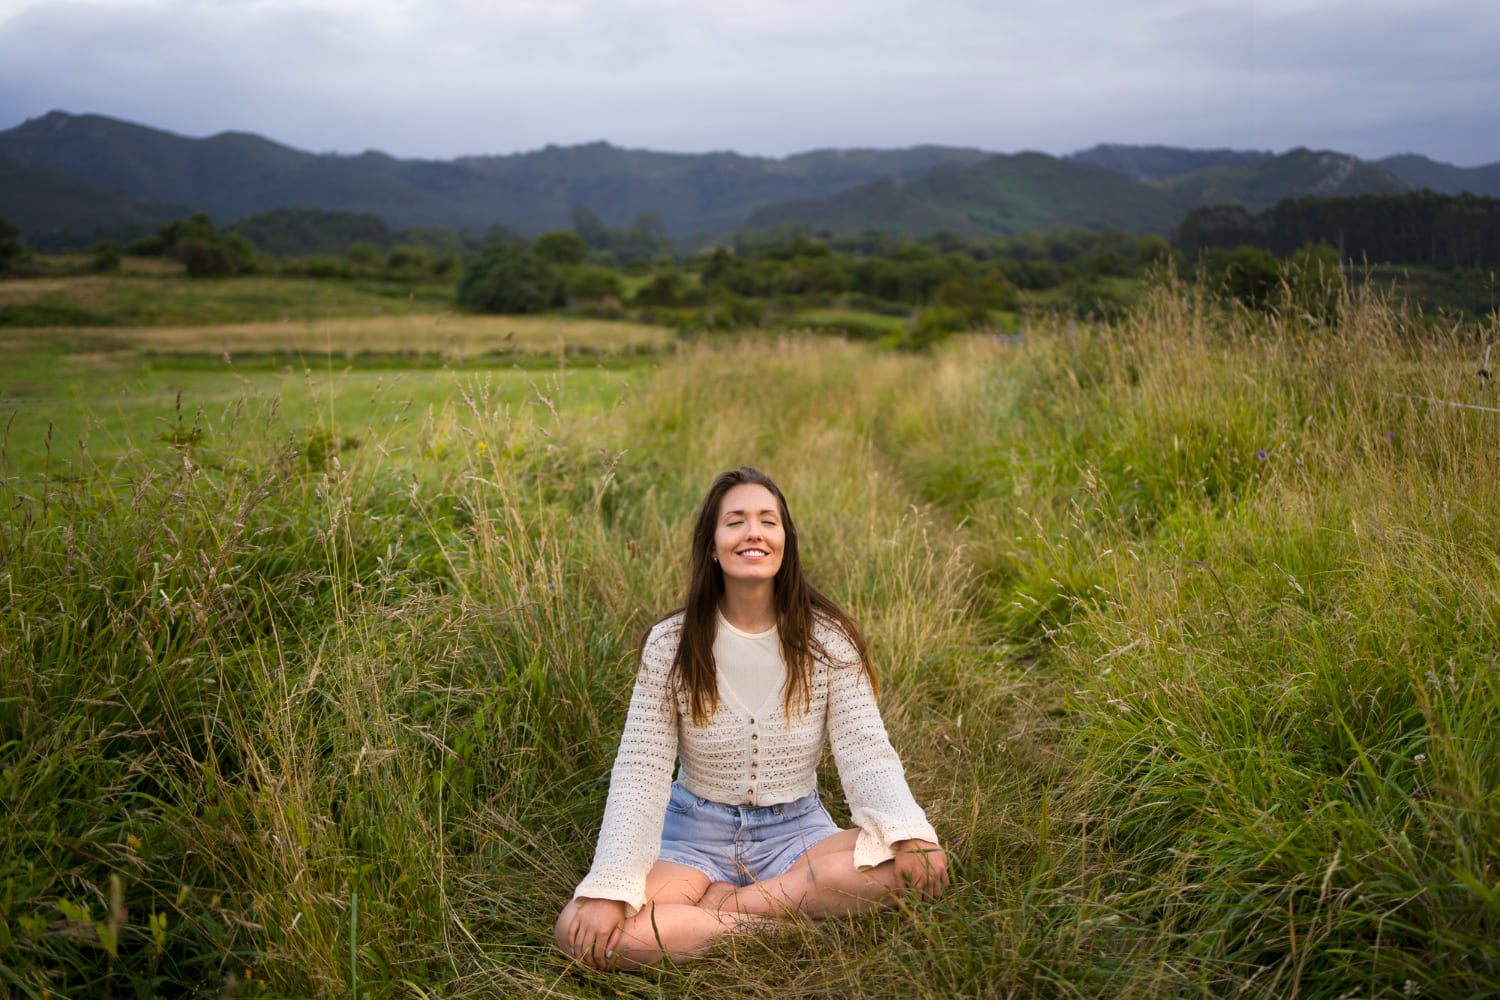 mindfulness vs meditation